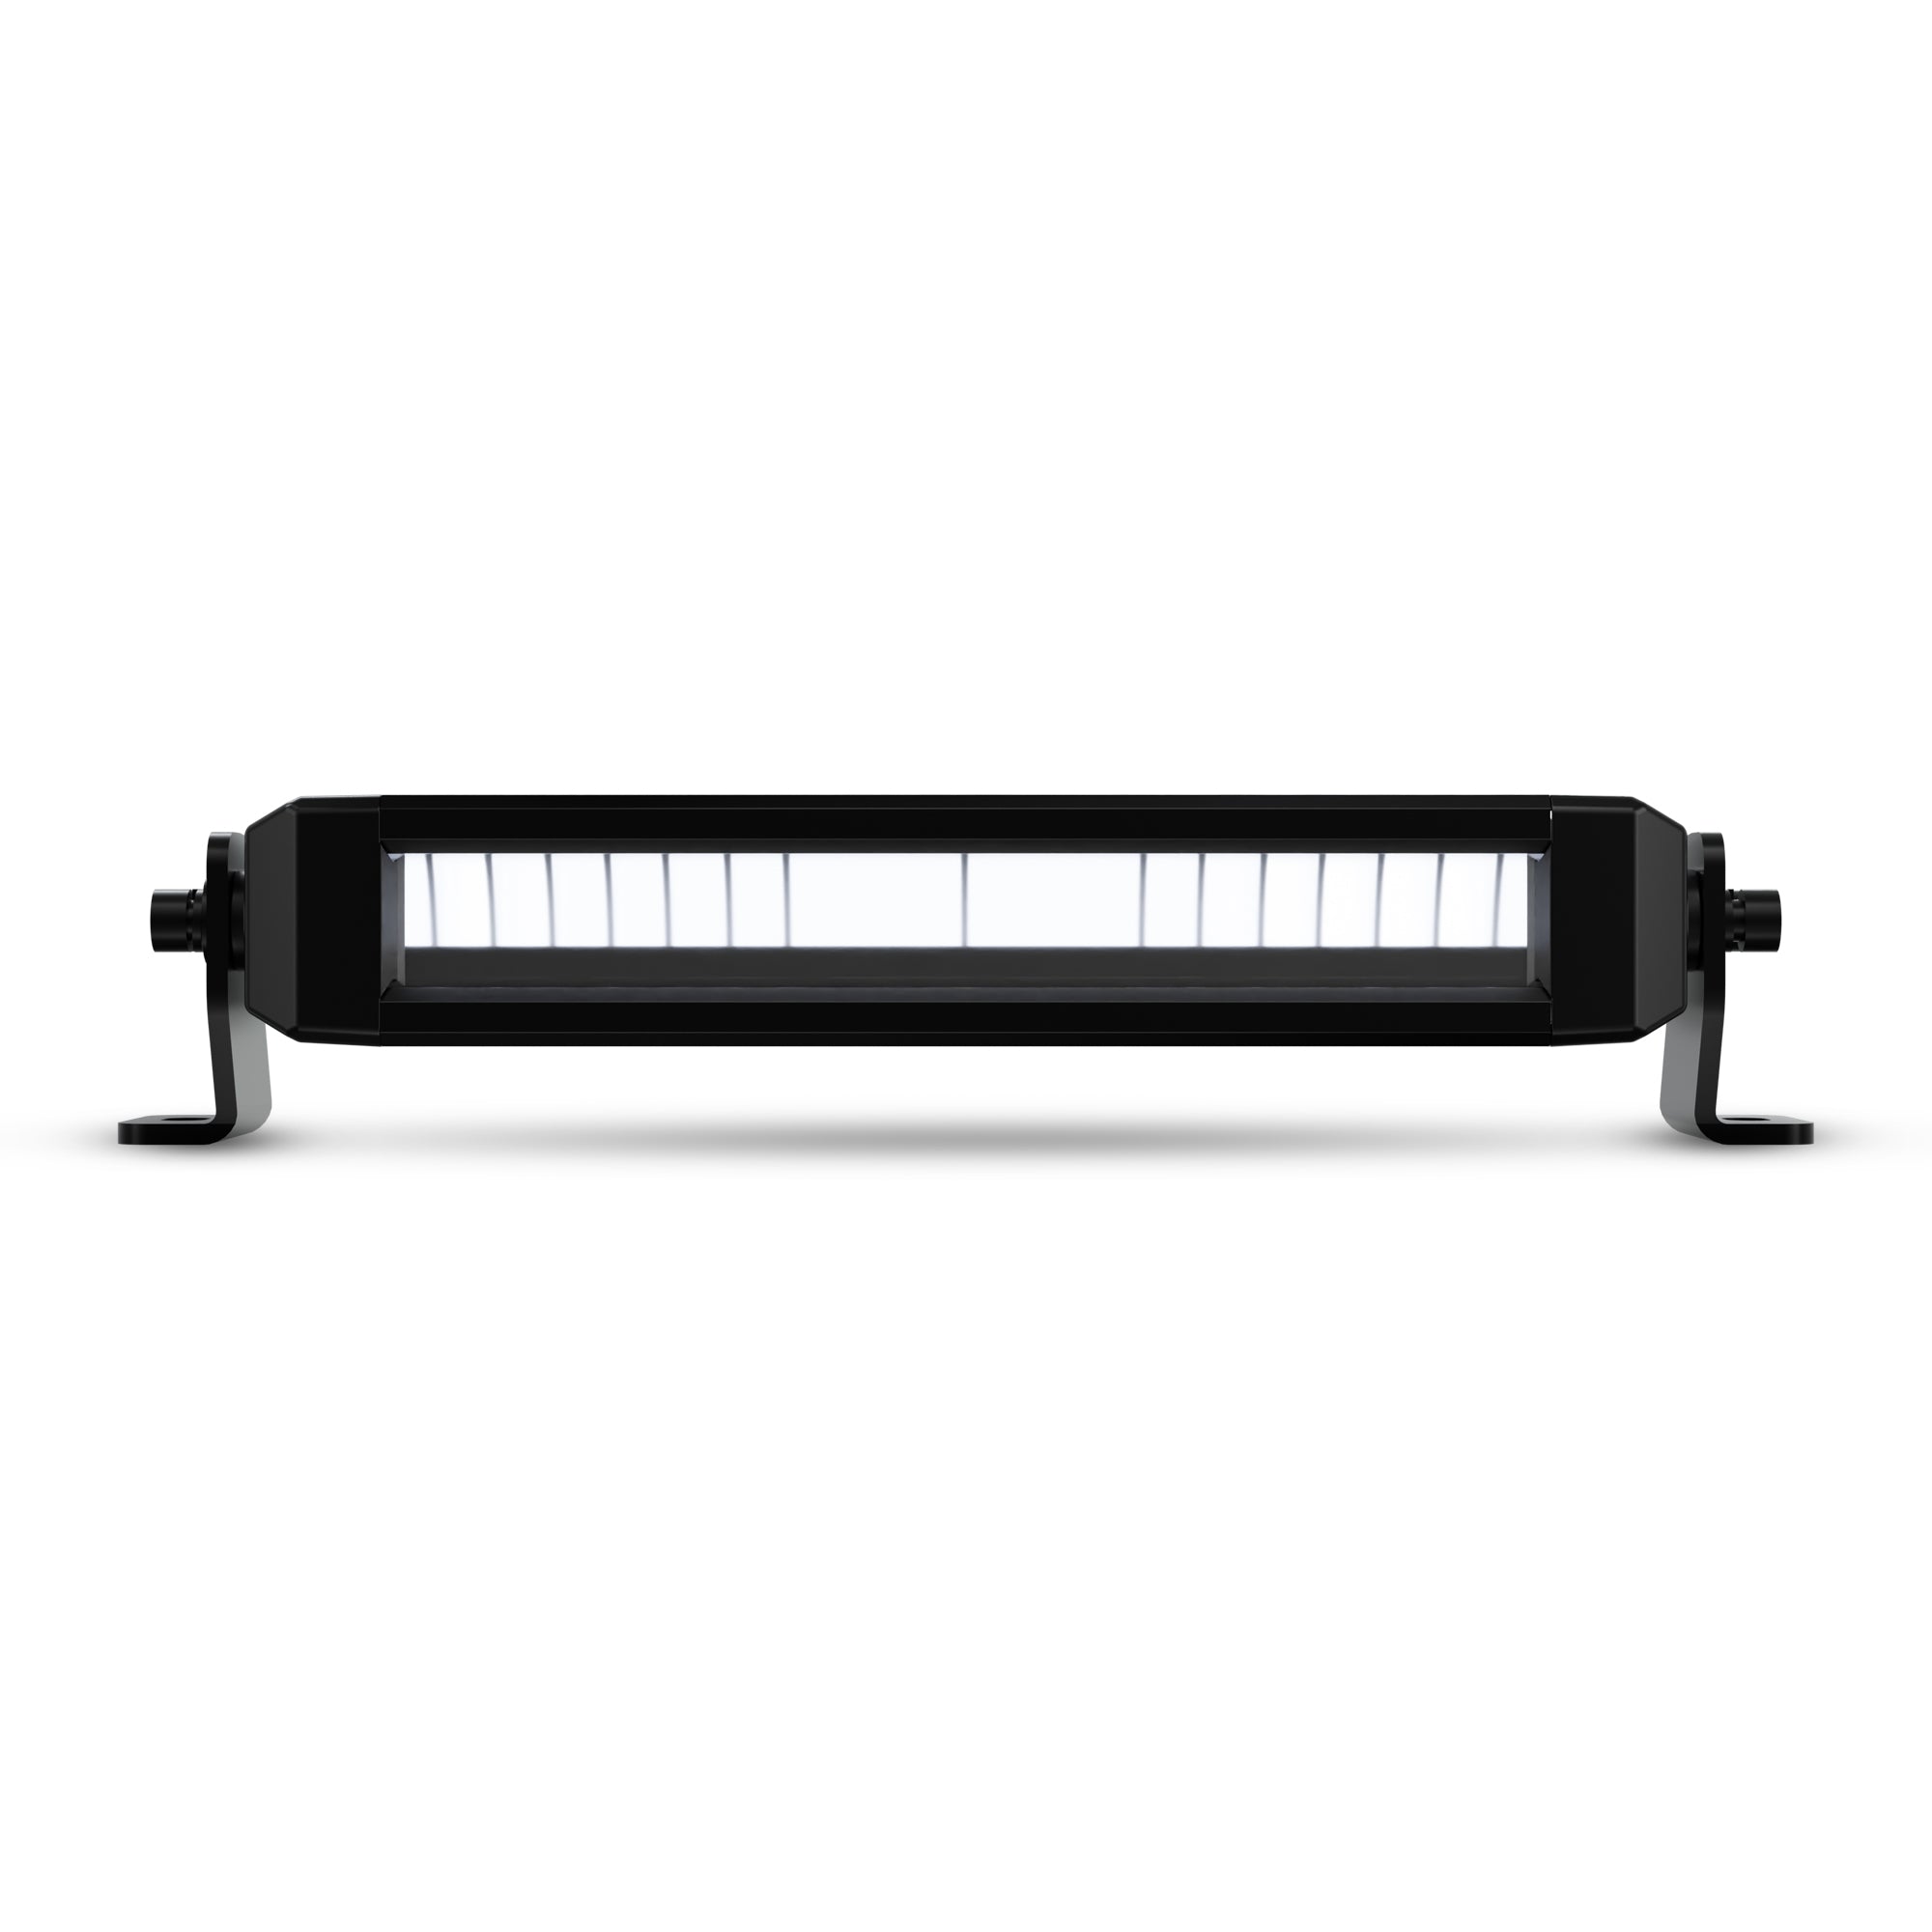 Barado 6 Inch Single Roof LED Light Bar | 30W | RGB Lights